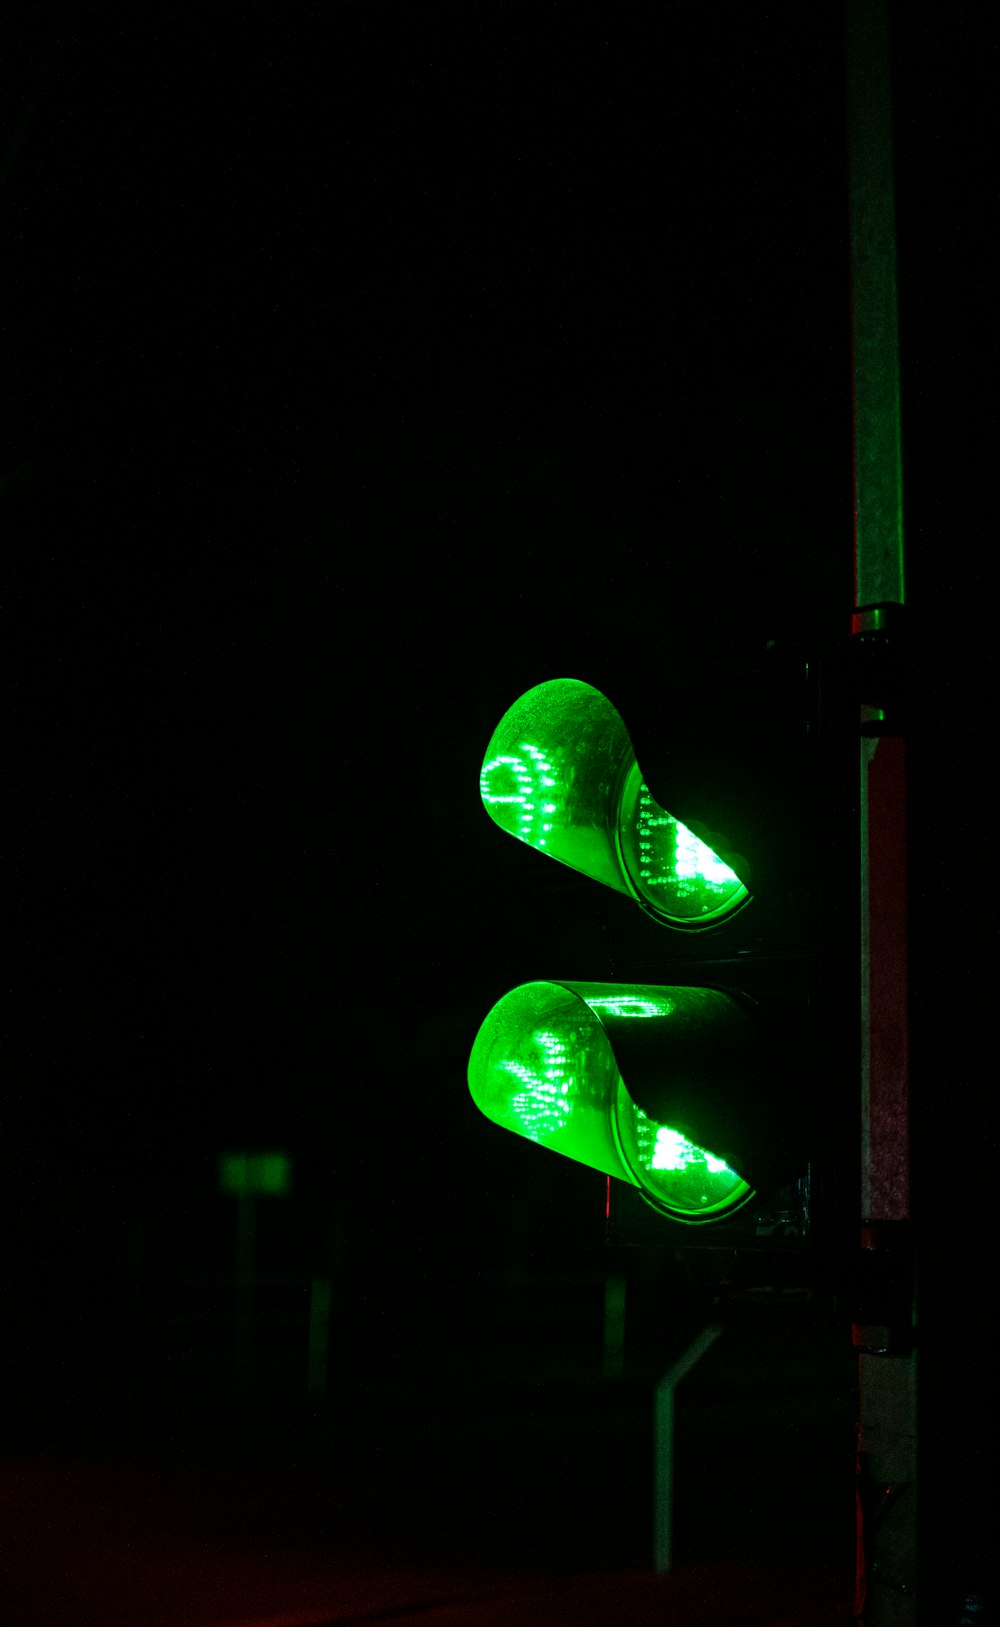 green light traffic light turned on during nighttime